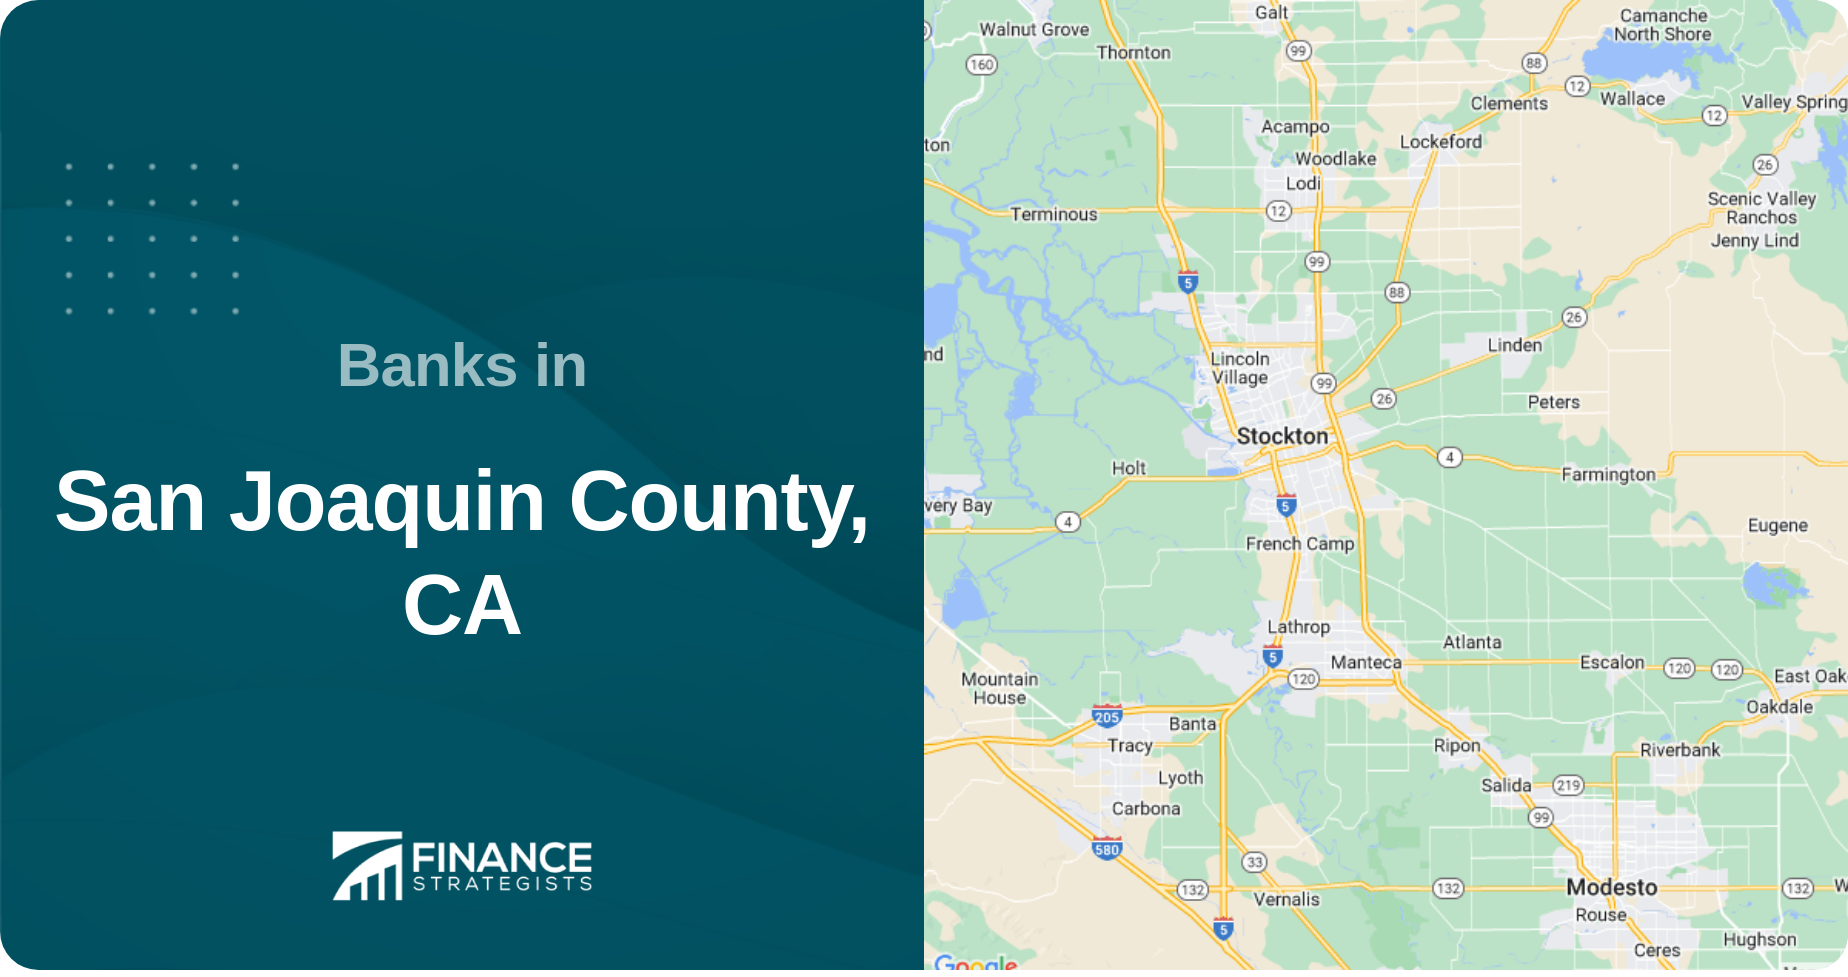 Banks in San Joaquin County, CA